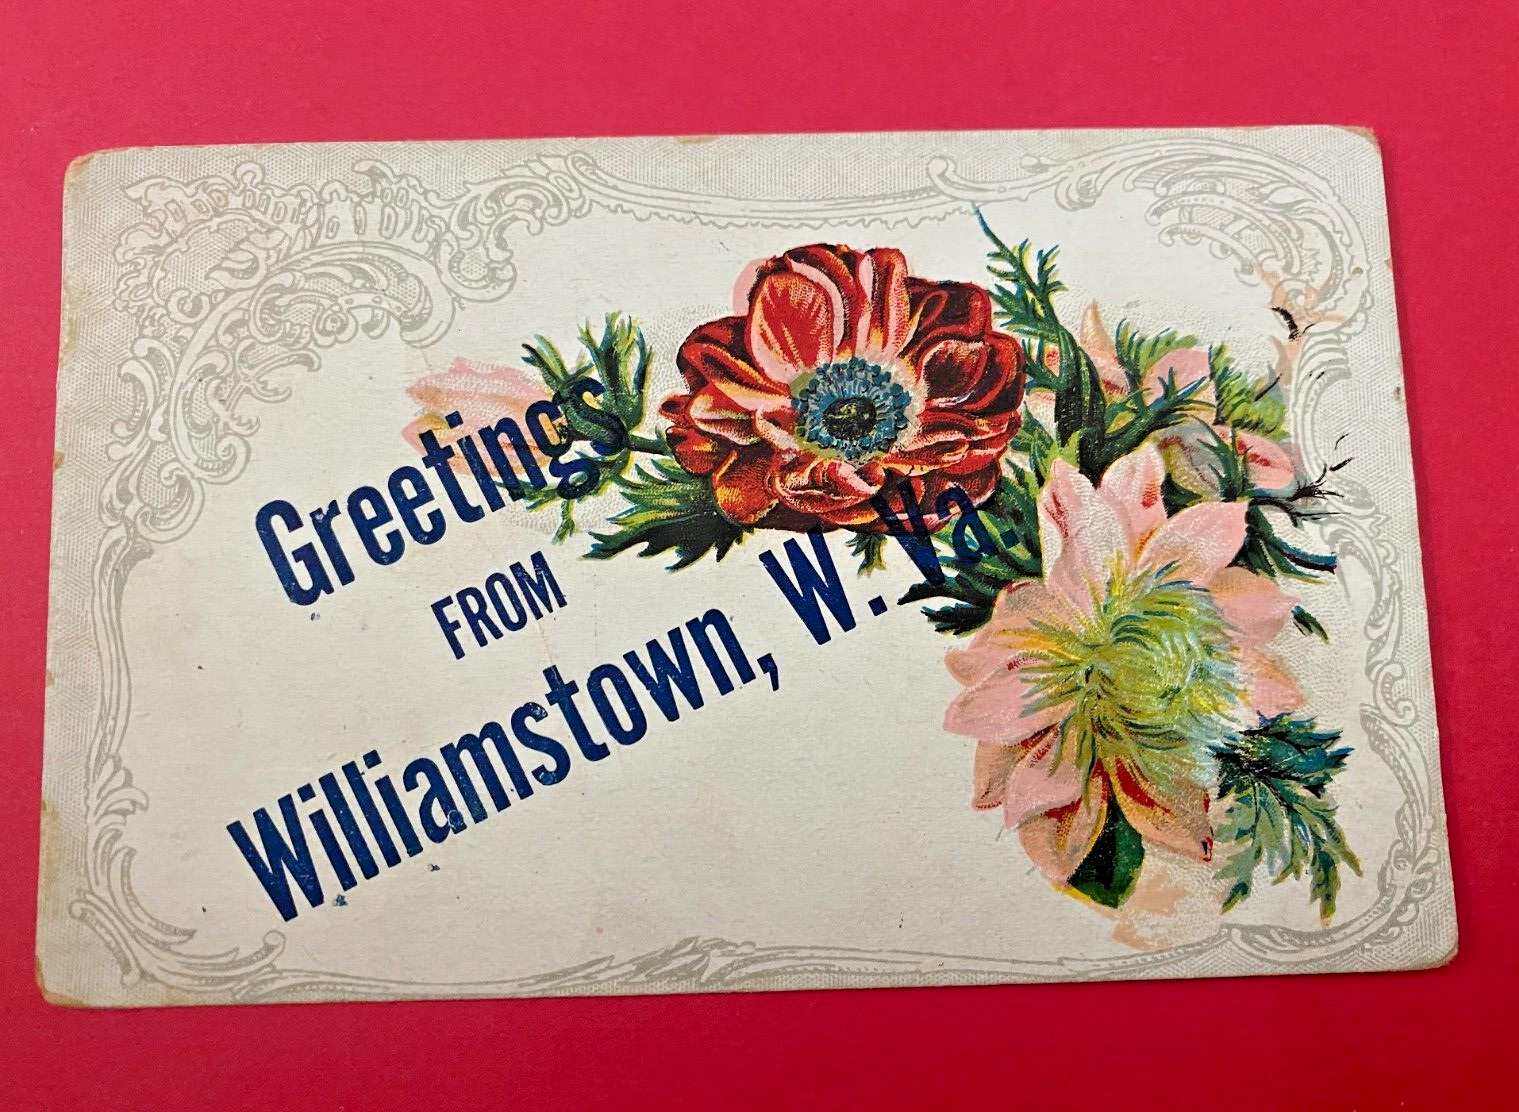 POSTCARD GREETINGS FROM WILLIAMSTOWN, W. VA.